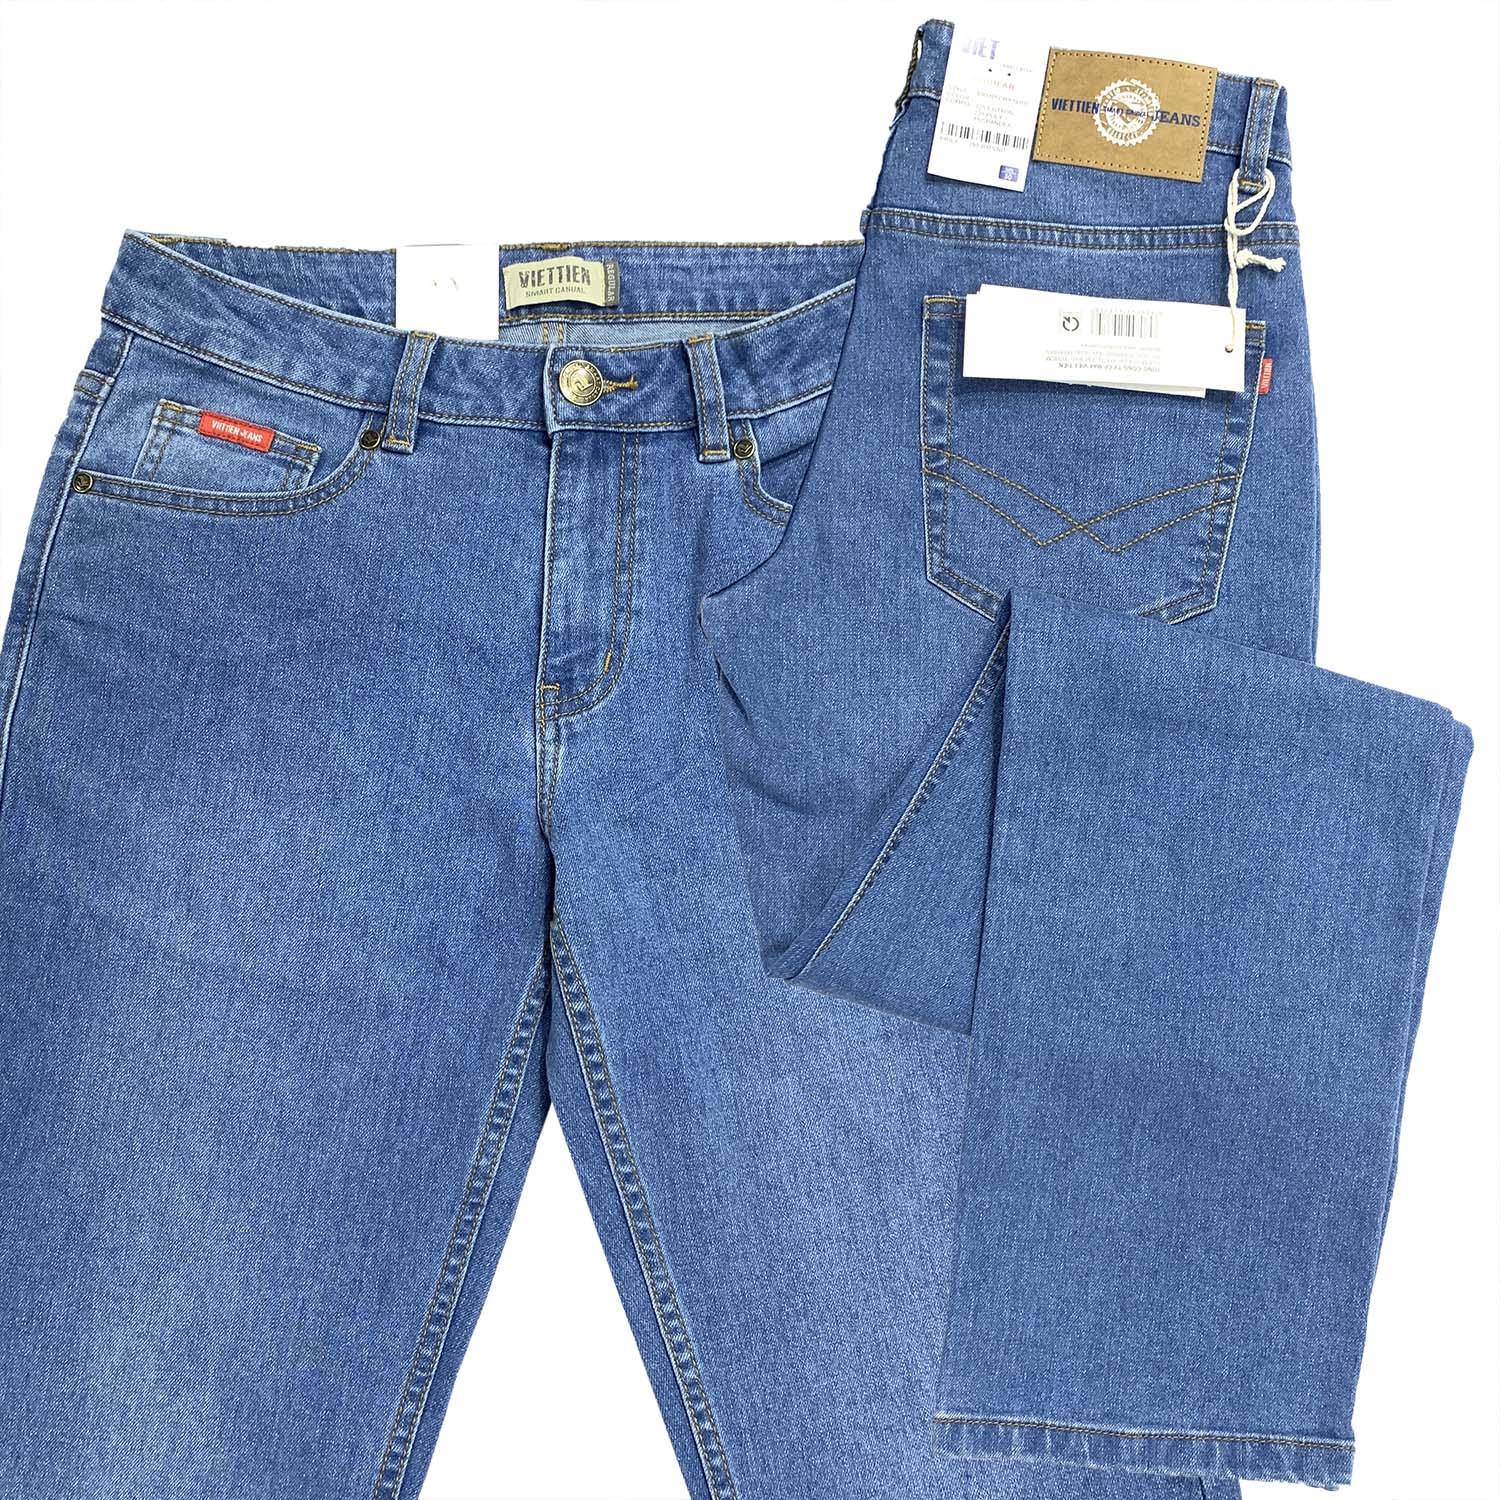 Viettien - Quần Jeans nam 6R7105 - 7106 gồm 2 phom dáng - regular may rộng - regular fit may vừa